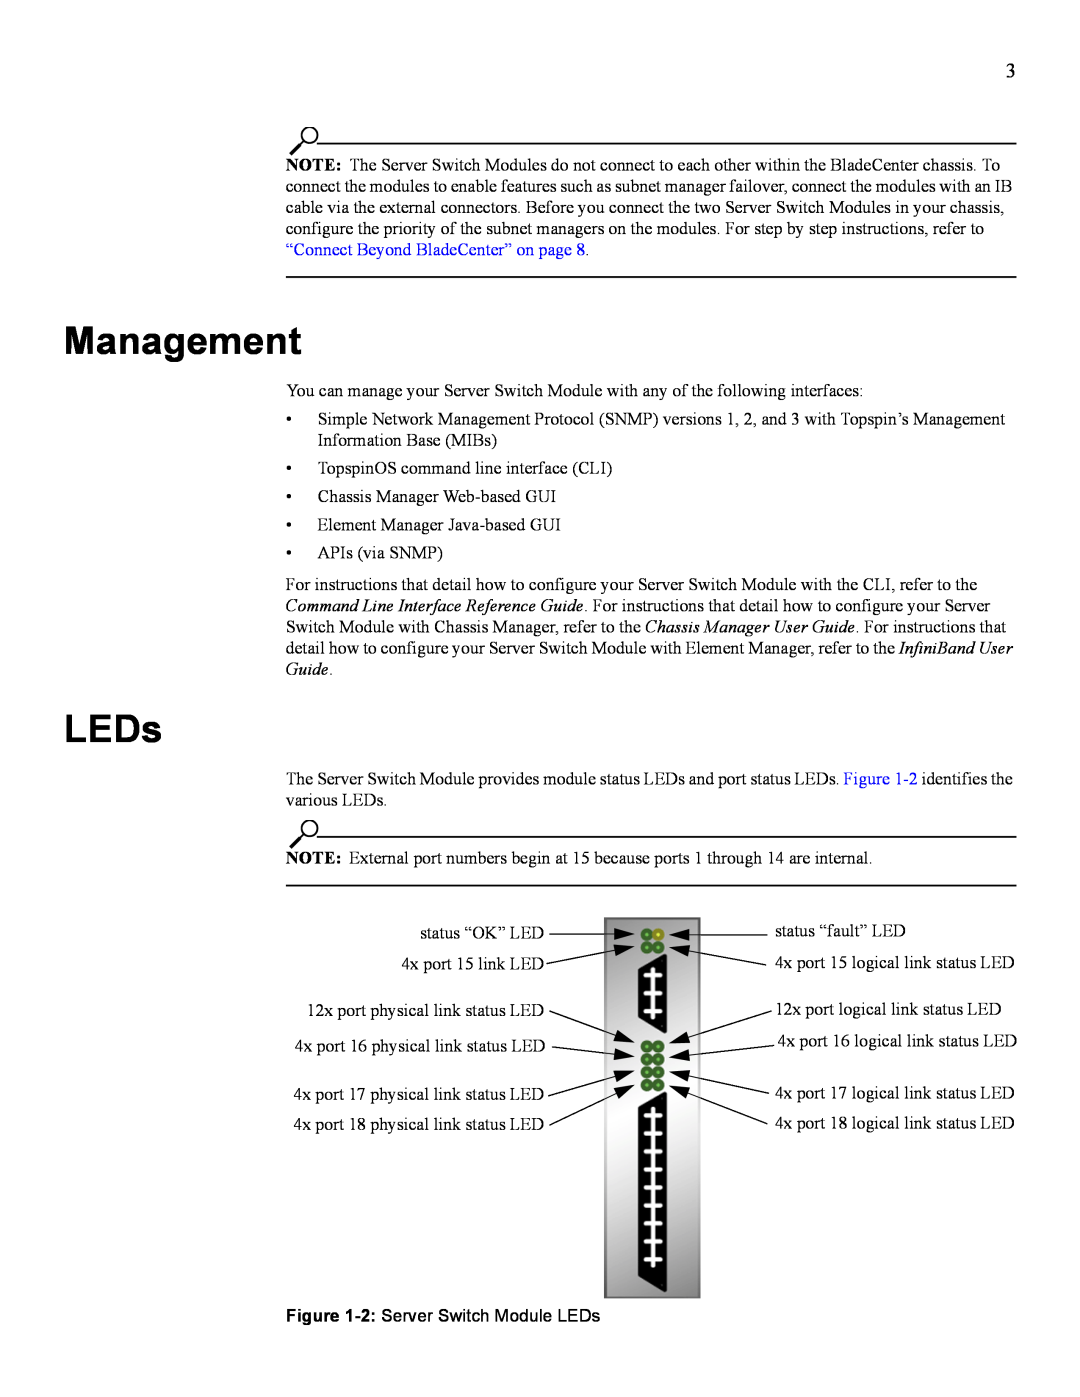 IBM 24R9718 IB manual Management, LEDs 